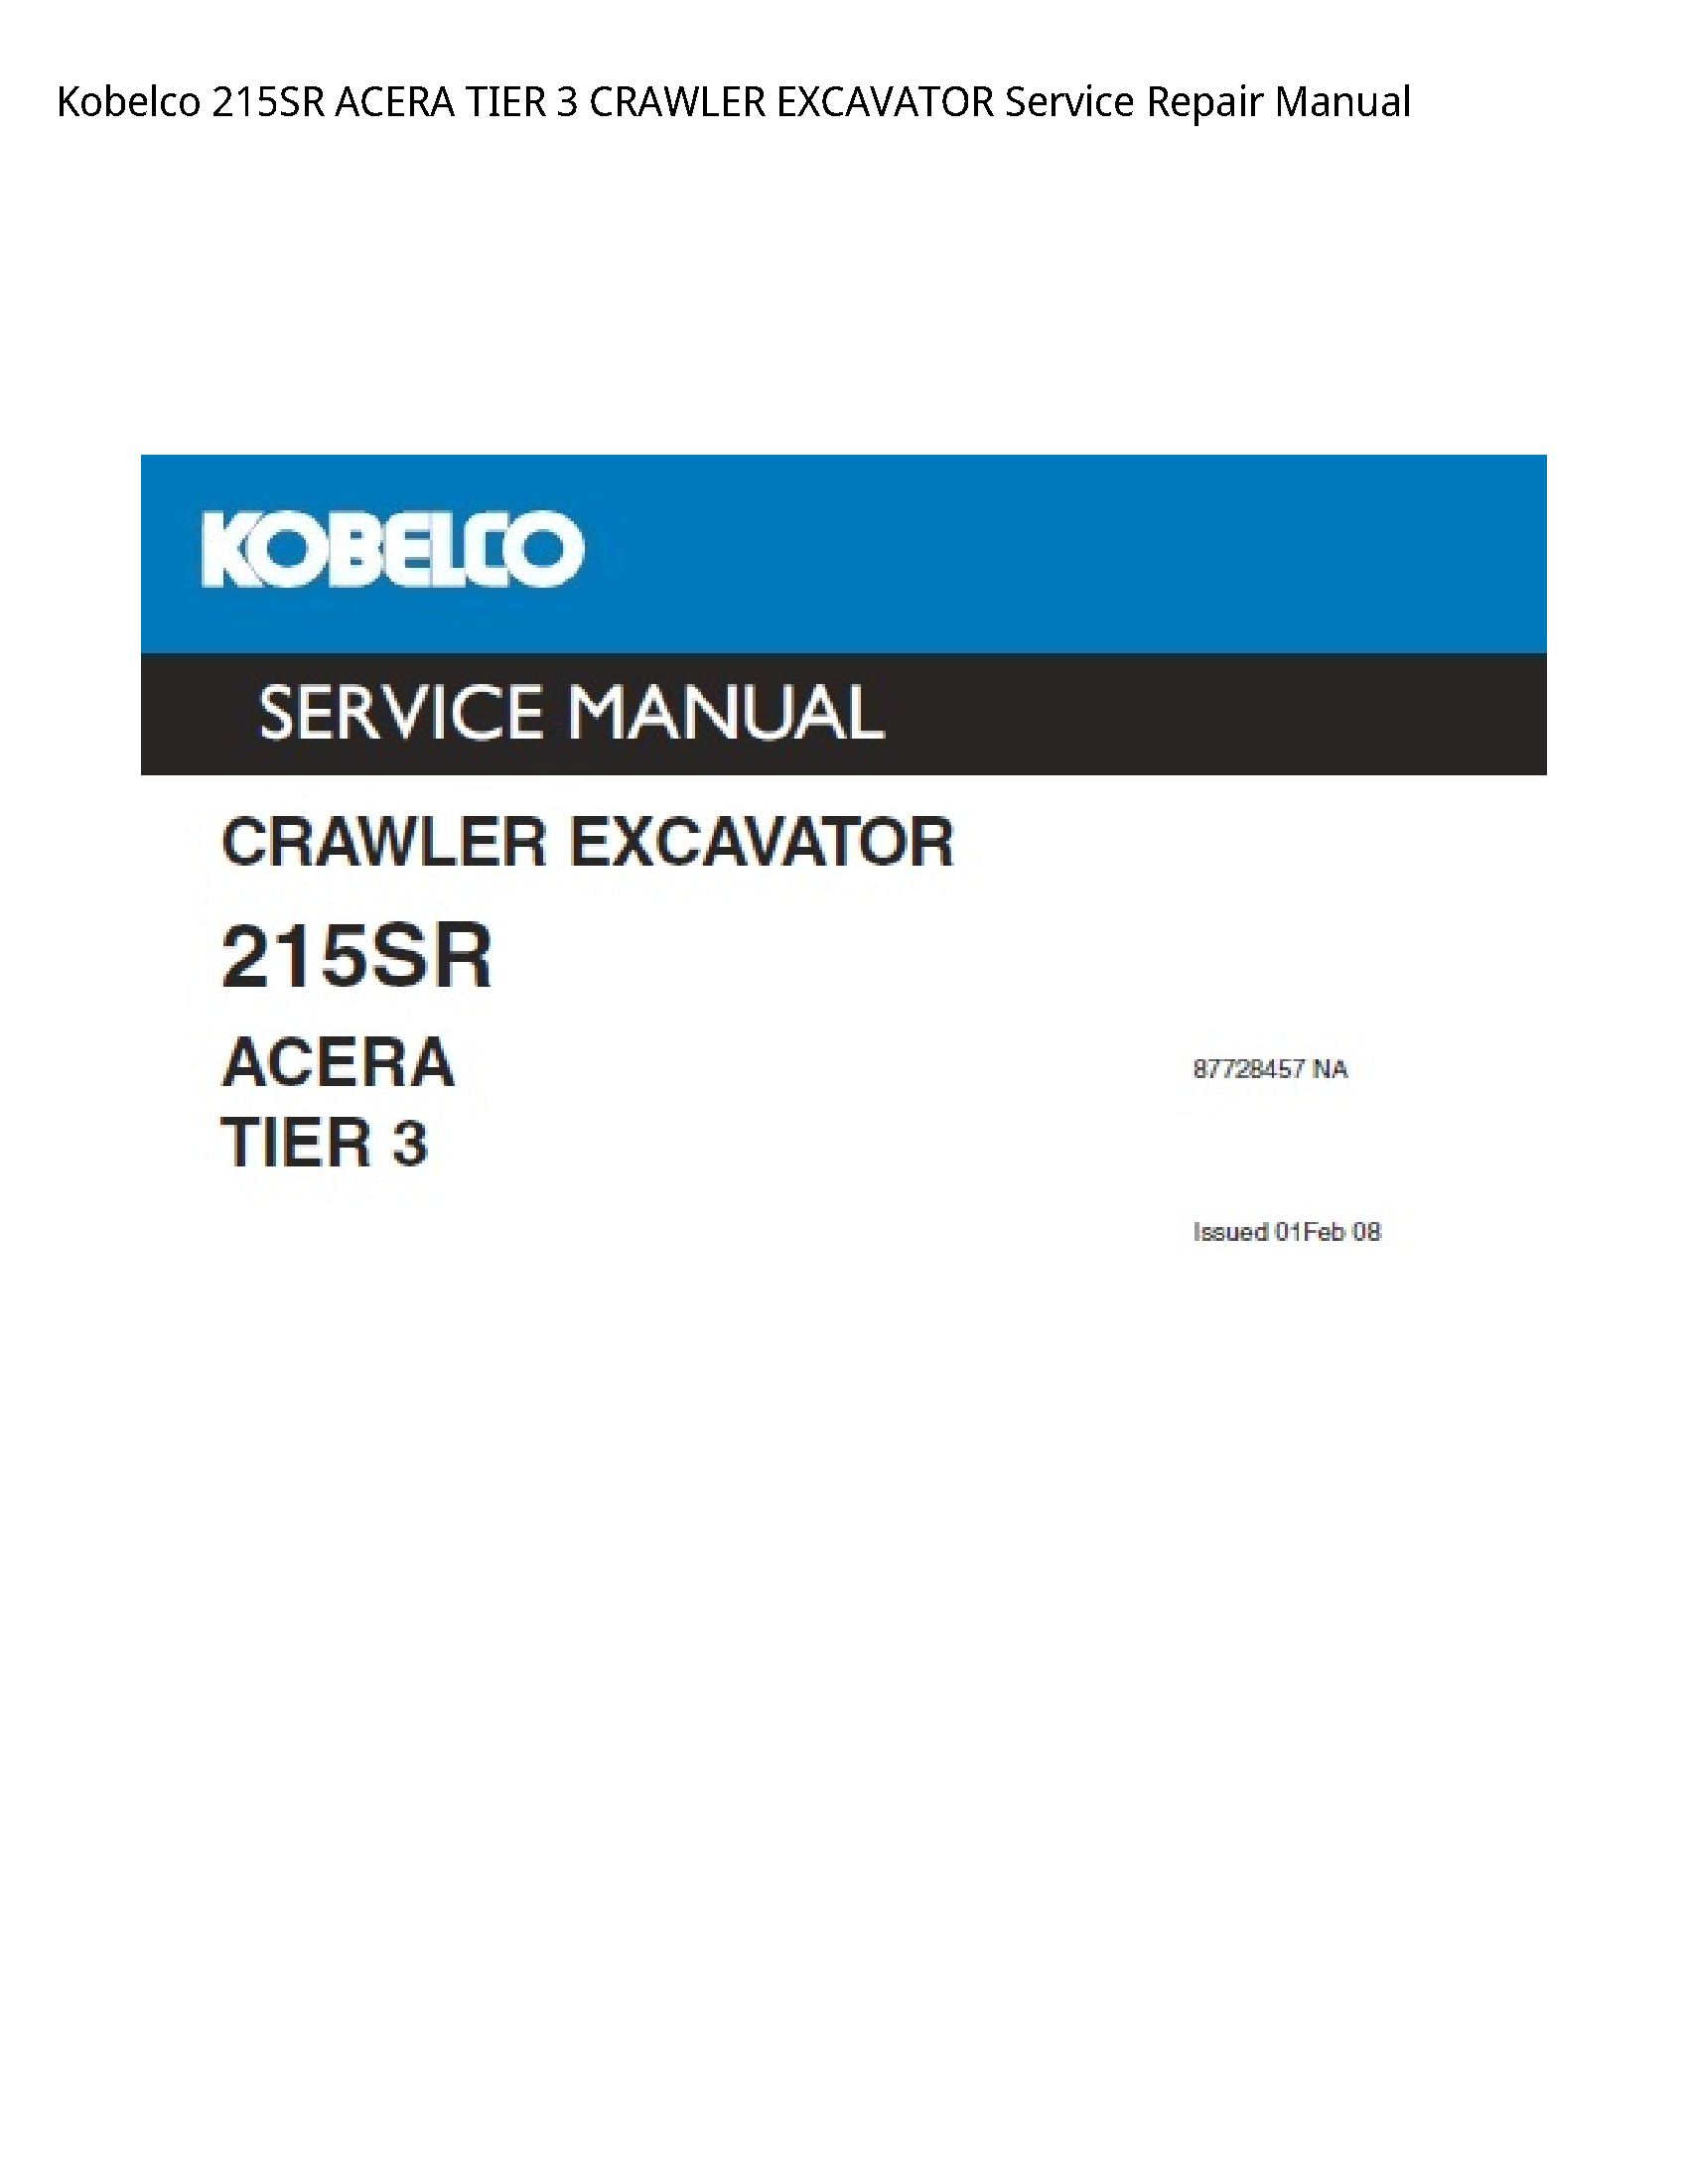 Kobelco 215SR ACERA TIER CRAWLER EXCAVATOR manual